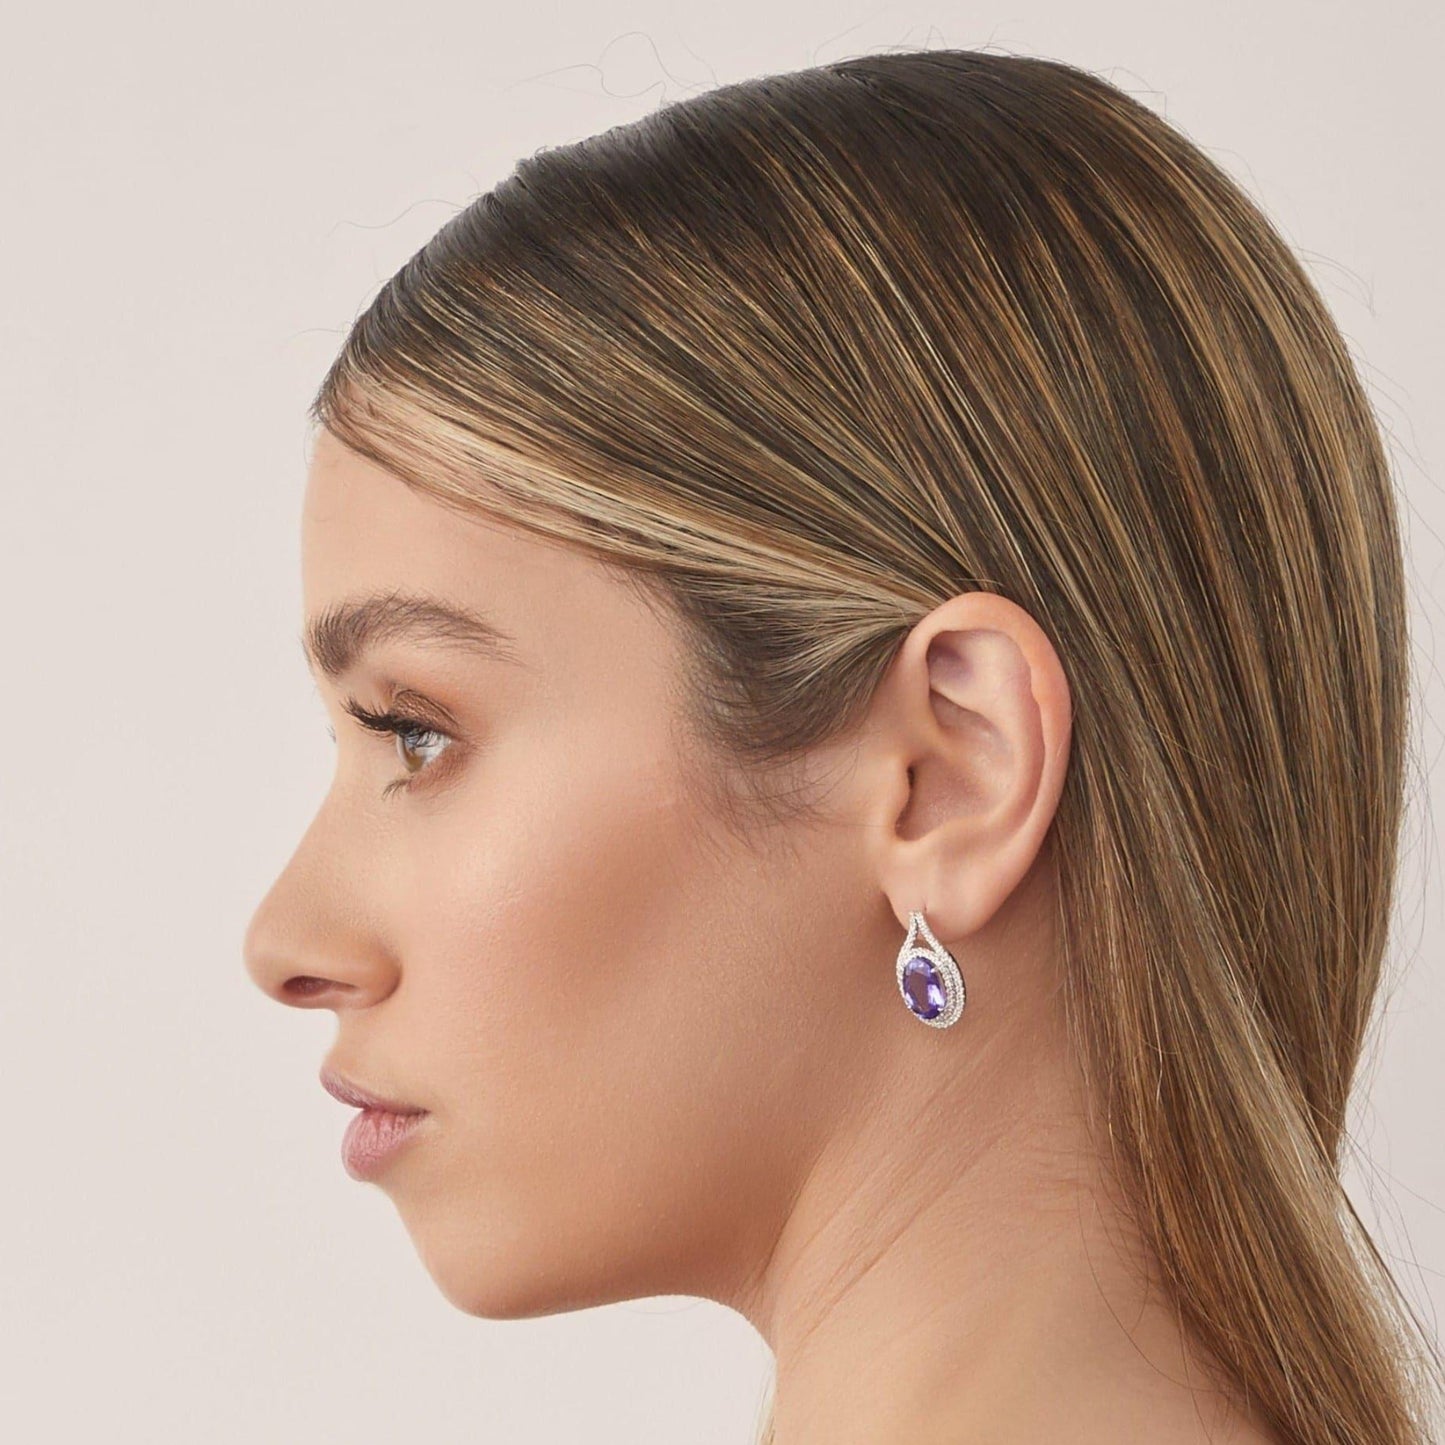 Tanzanite and Double Diamond Halo Earrings - Rosendorff Diamond Jewellers